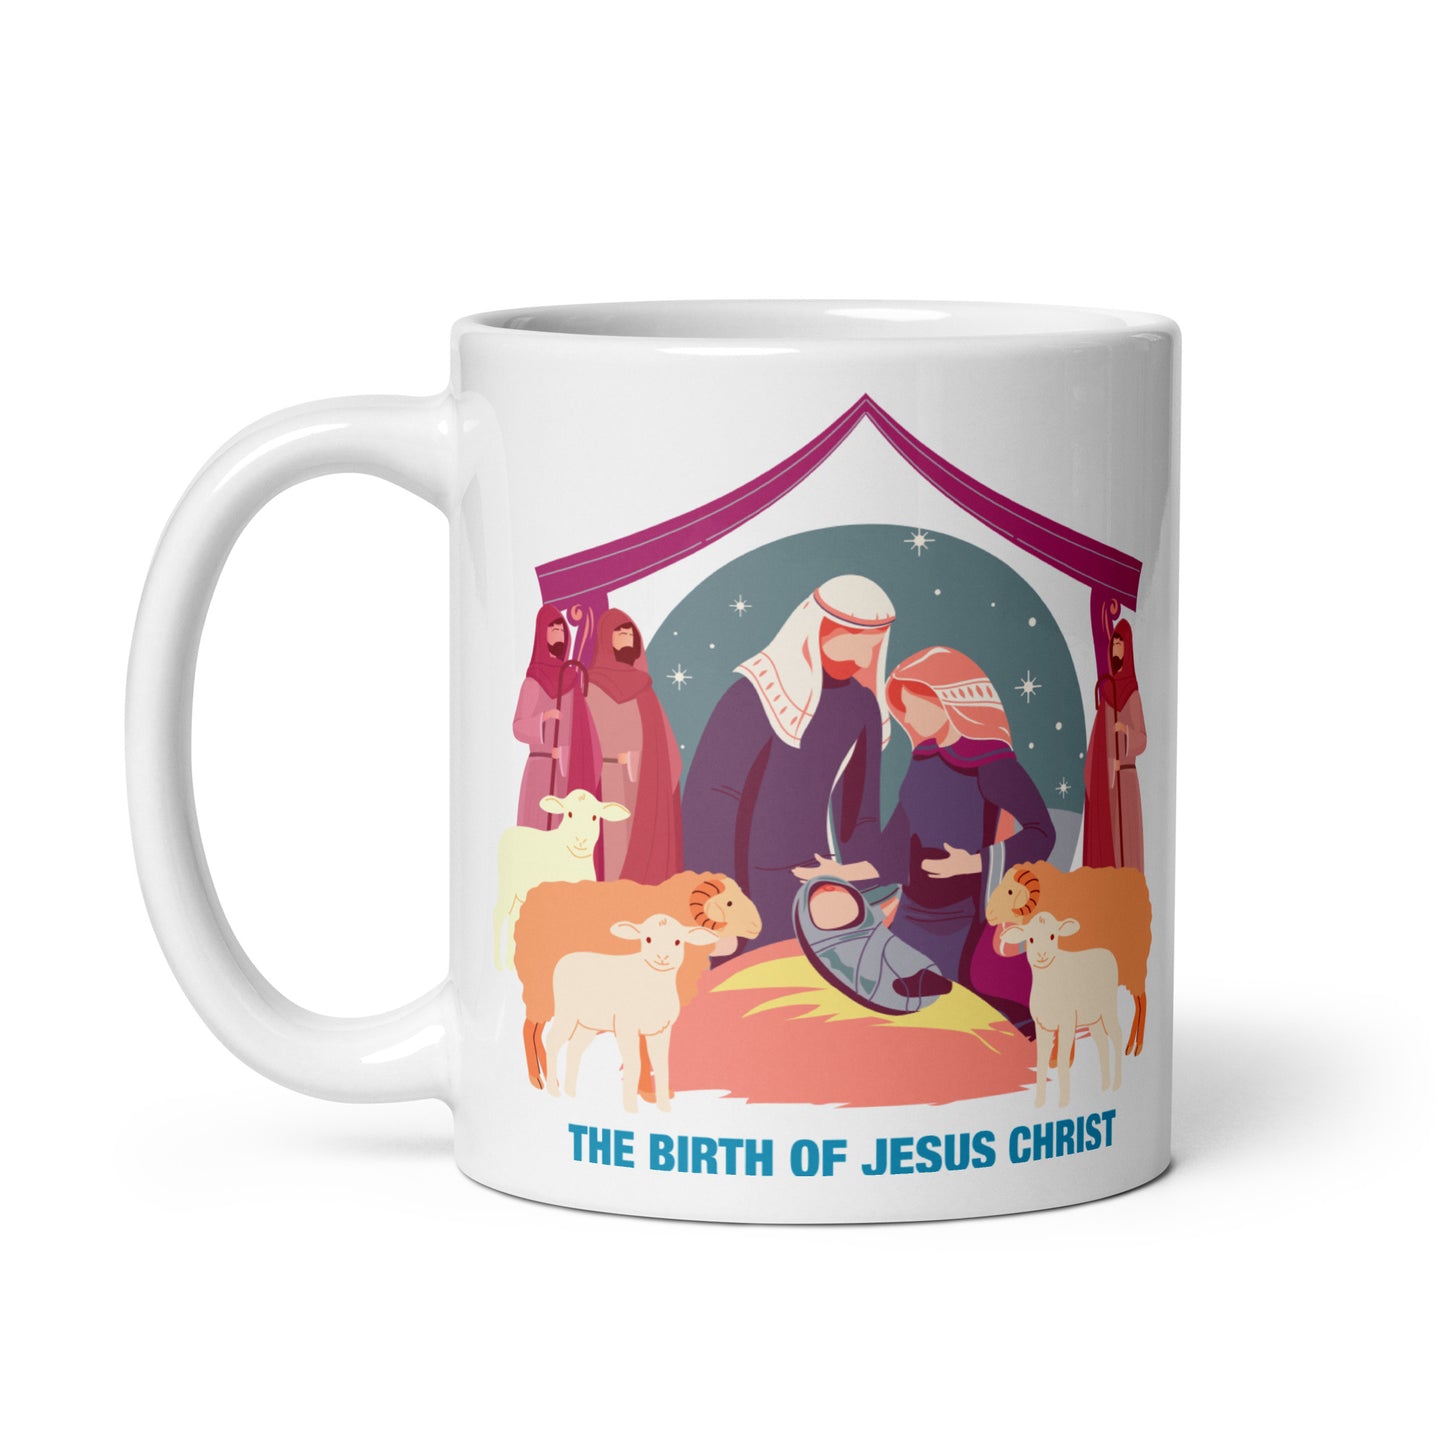 The Birth of Jesus Christ White Glossy Mug